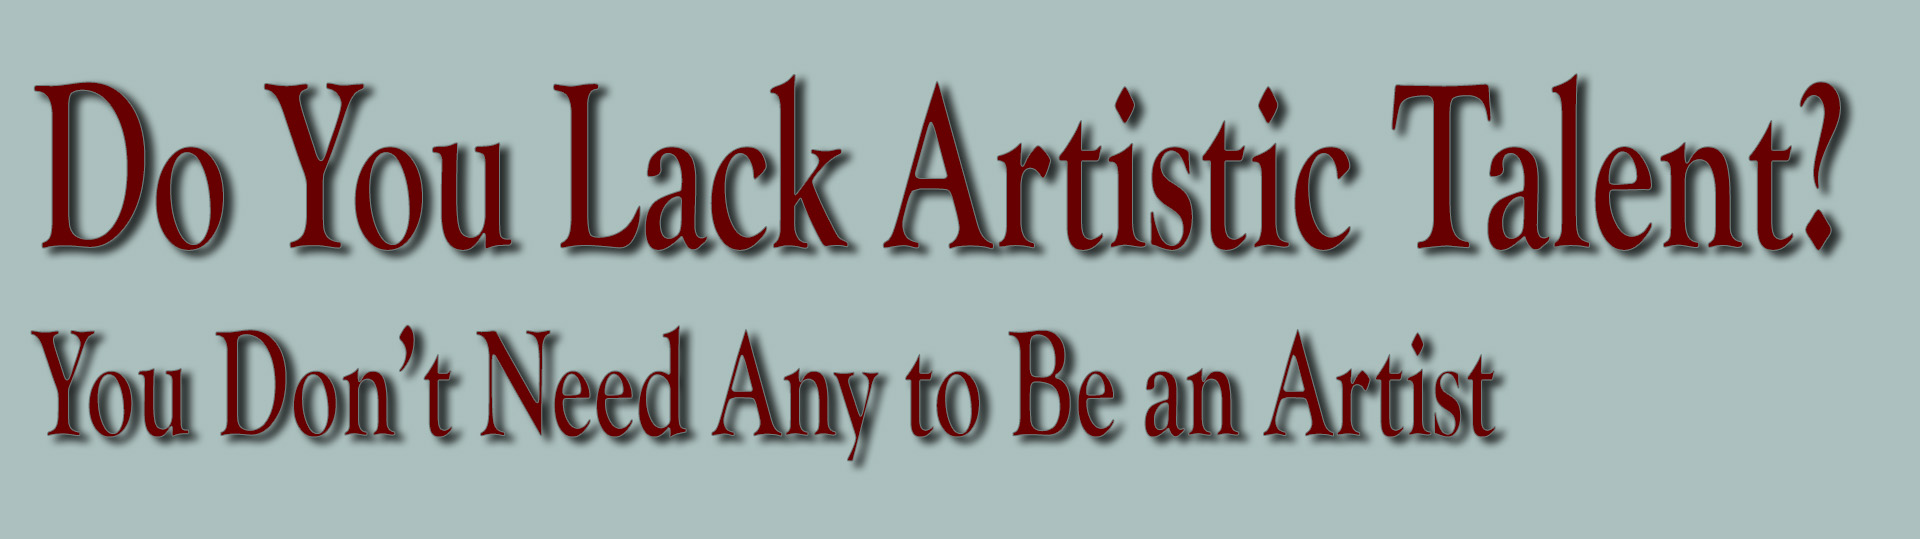 Do You Lack Artistic Talent?